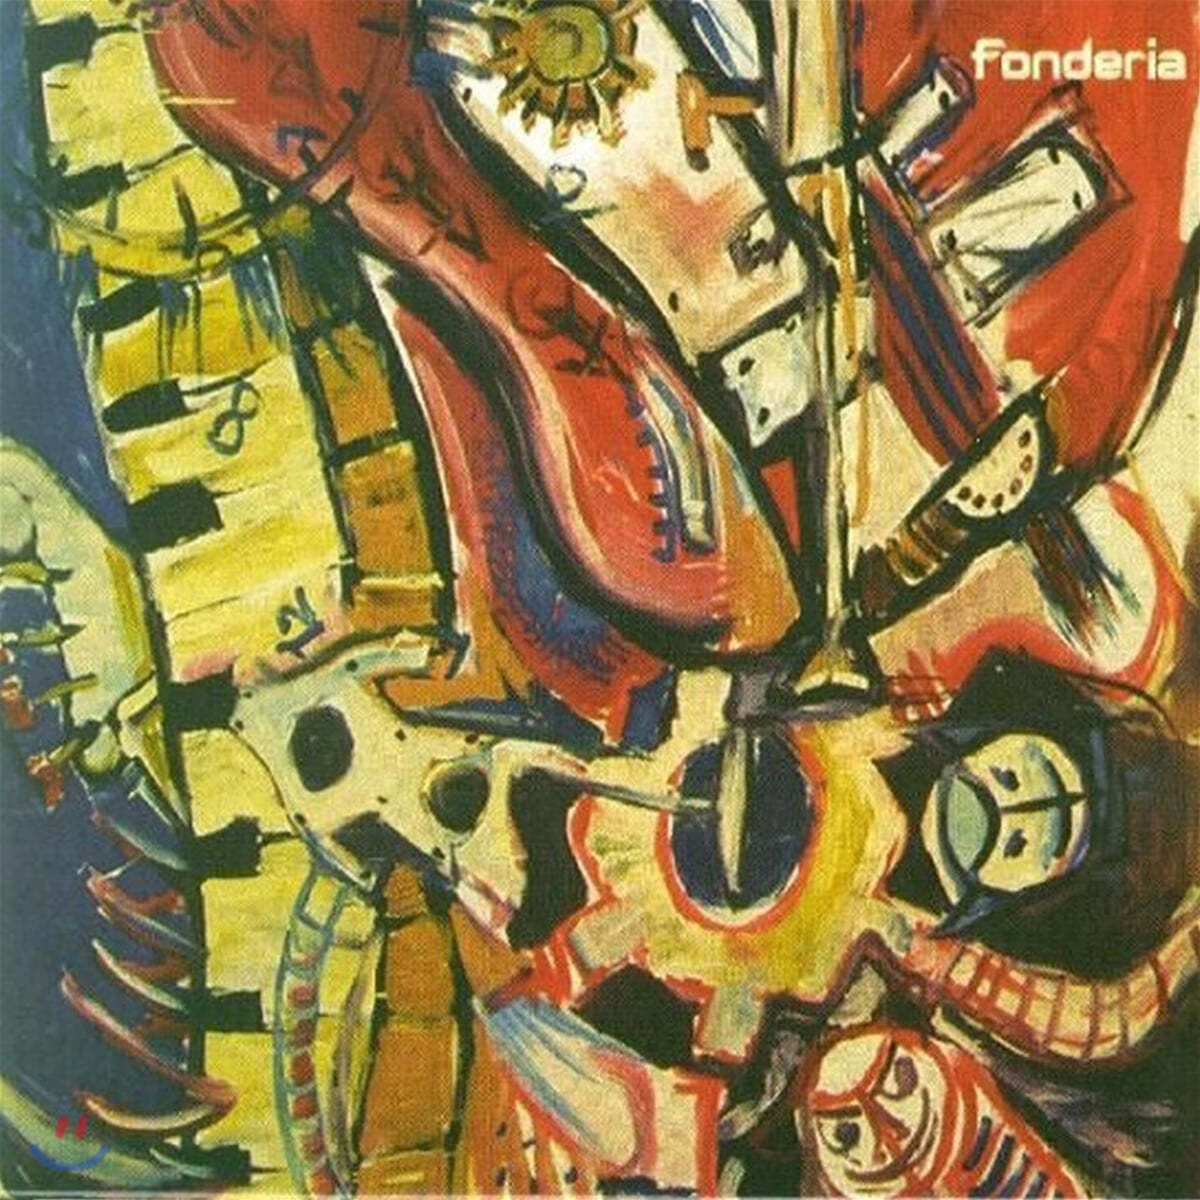 Fonderia (폰데리아) - Fonderia